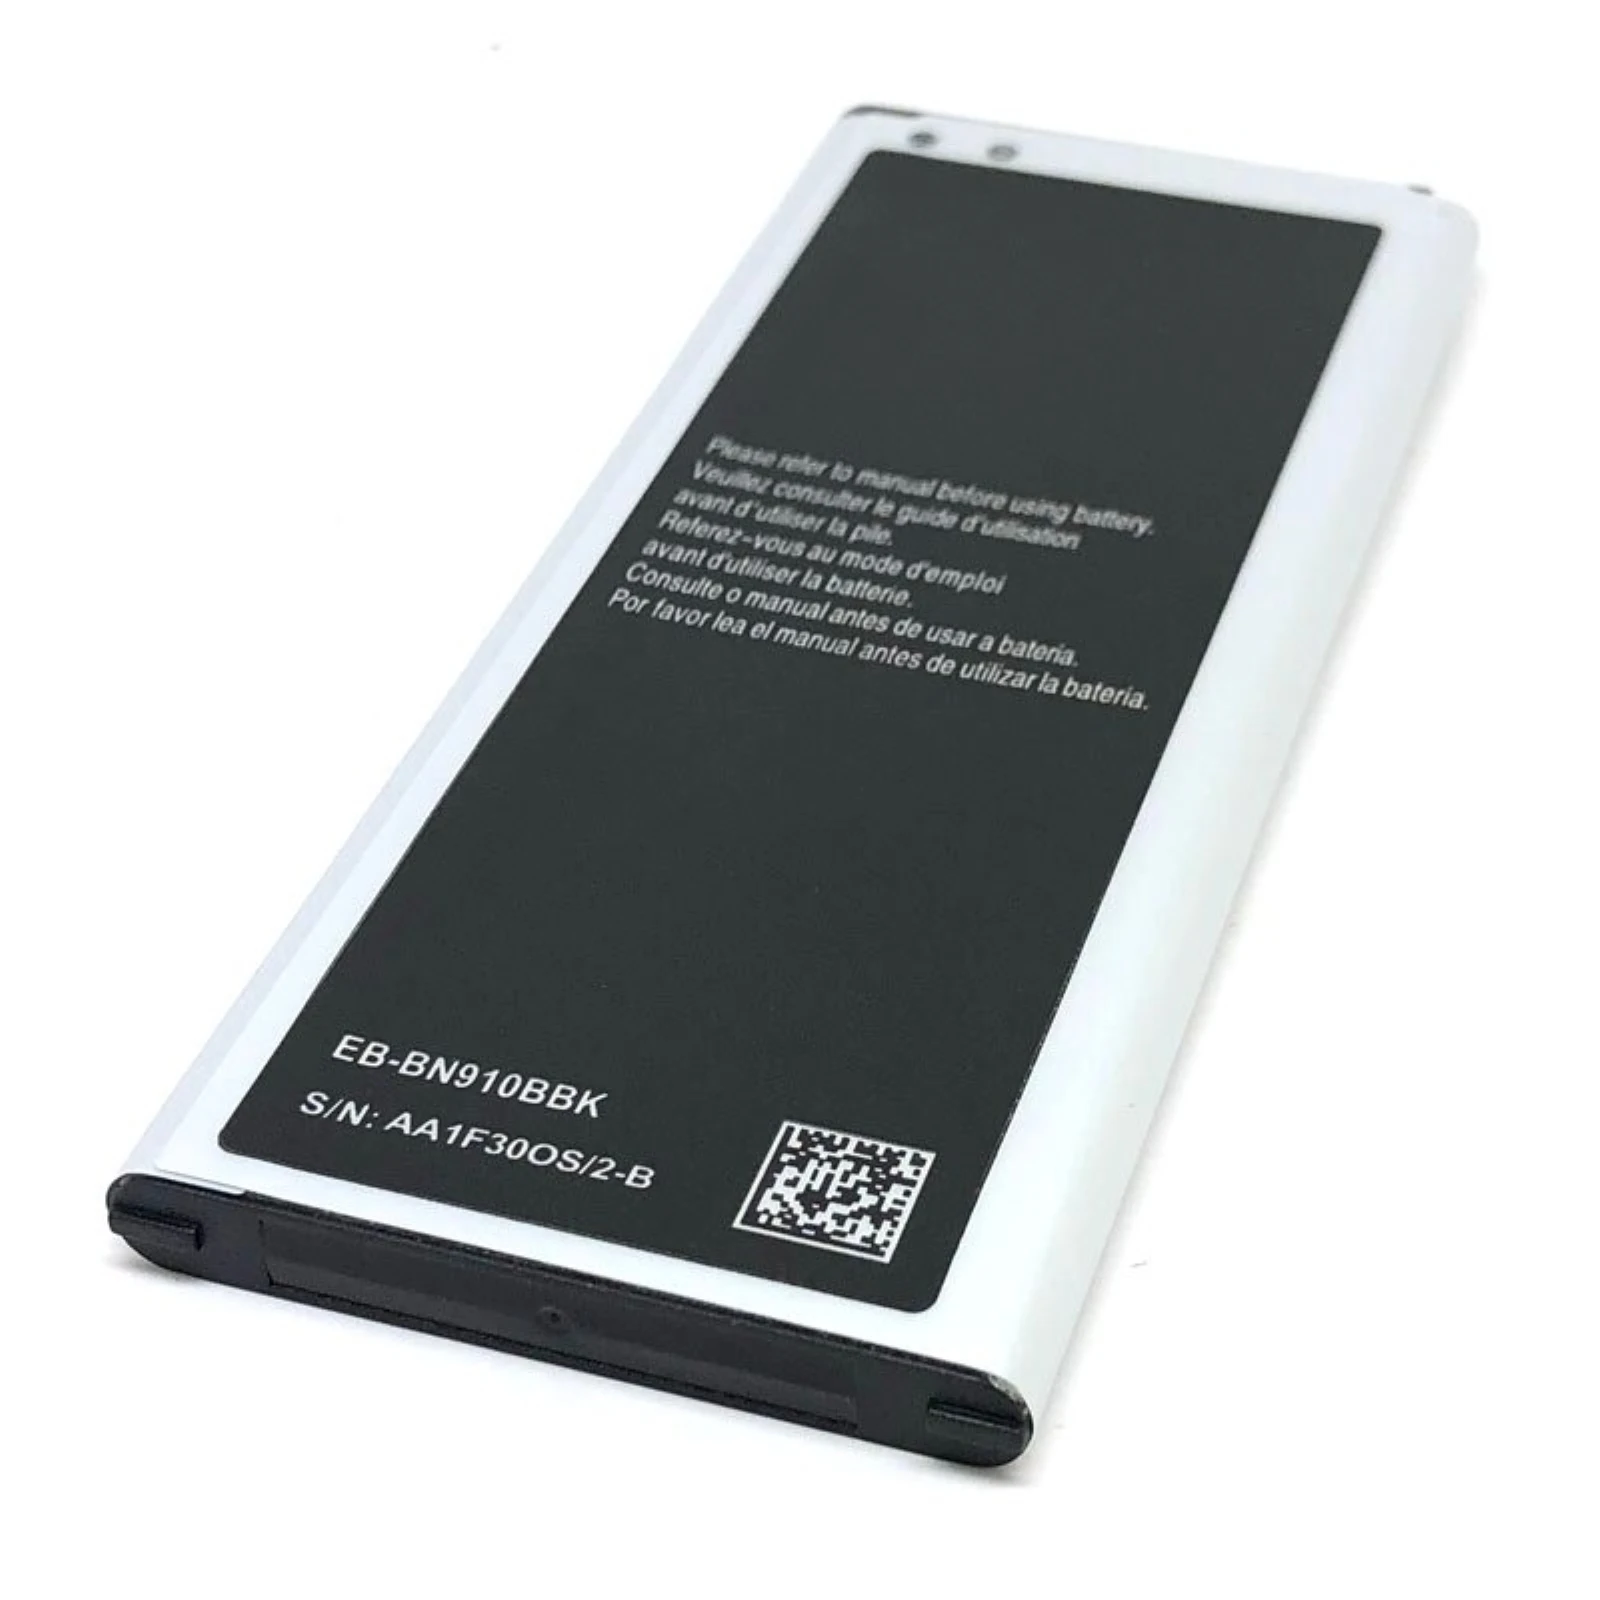 Suderinama bateriją, skirtą SAMSUNG GALAXY Note 4 iV EB-BN910BBK